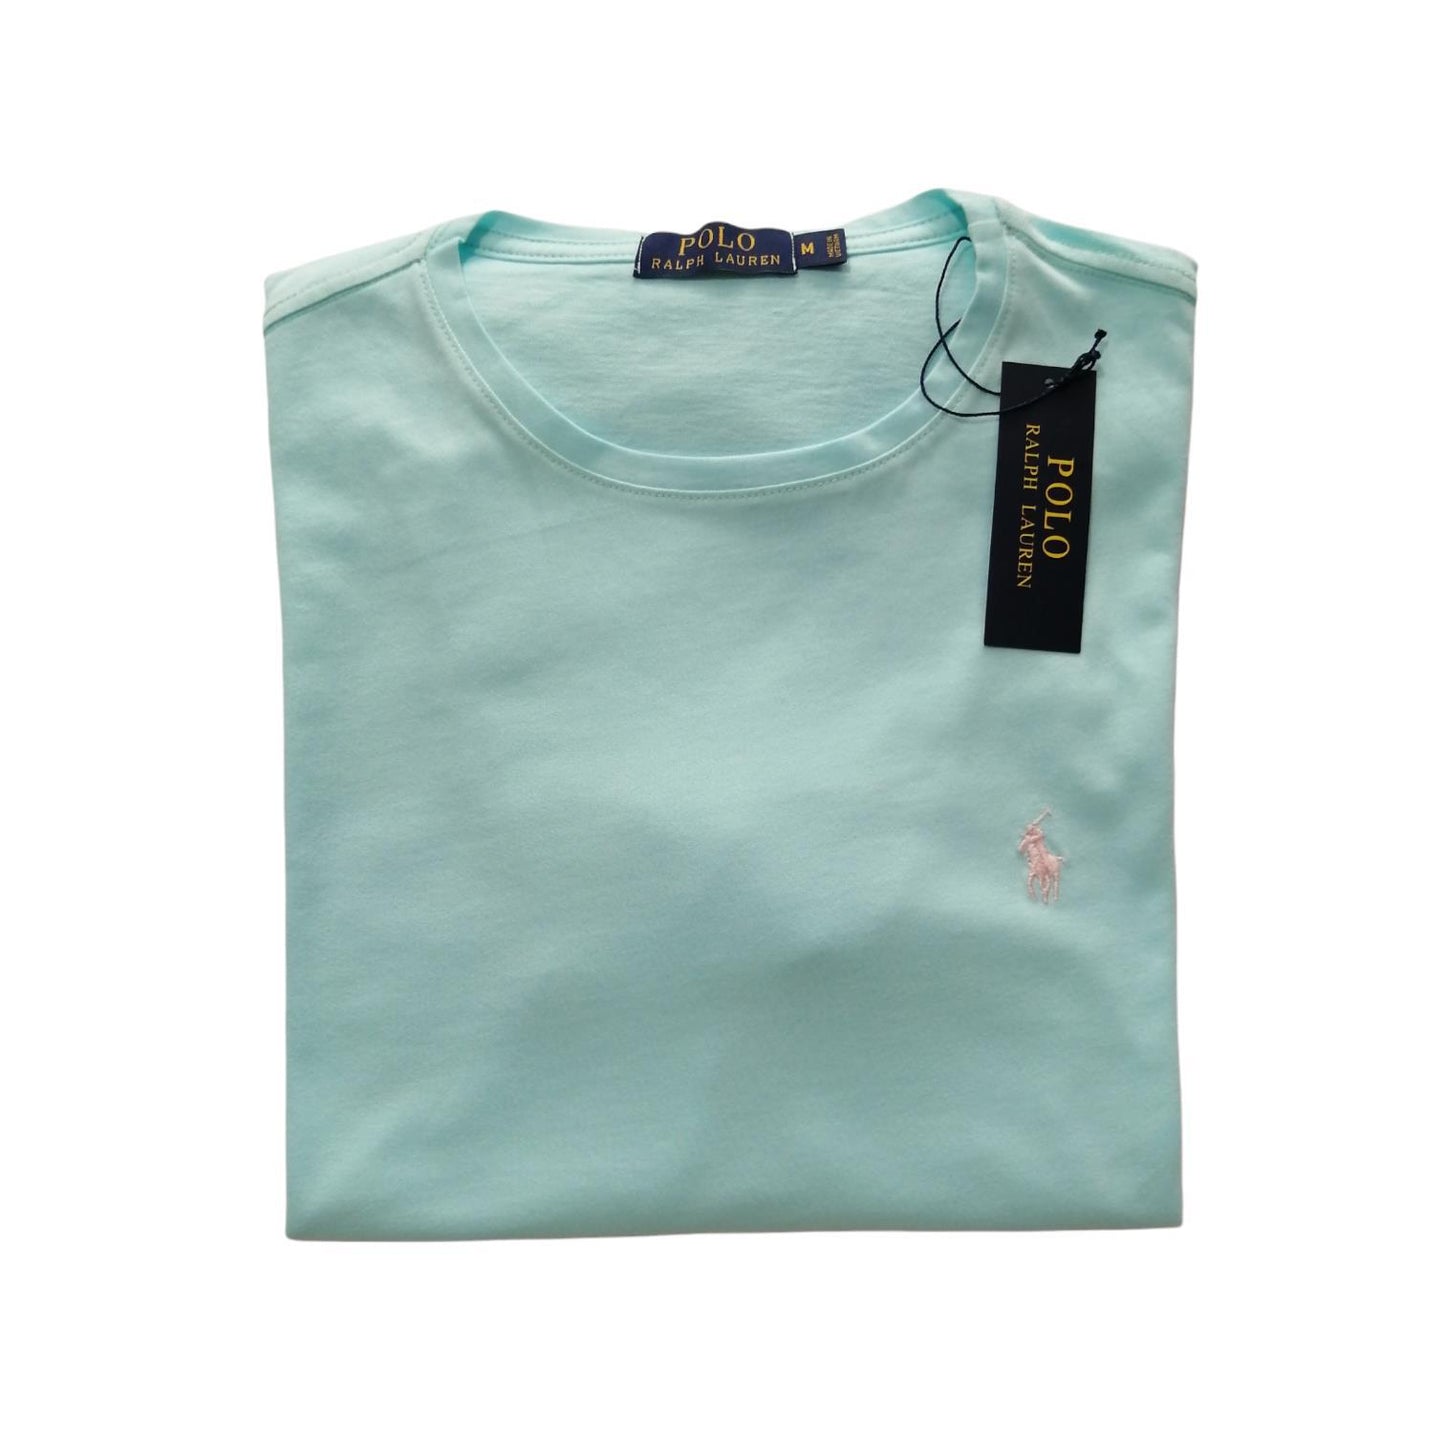 Camiseta cuello redondo manga corta color agua marina Ralph Lauren